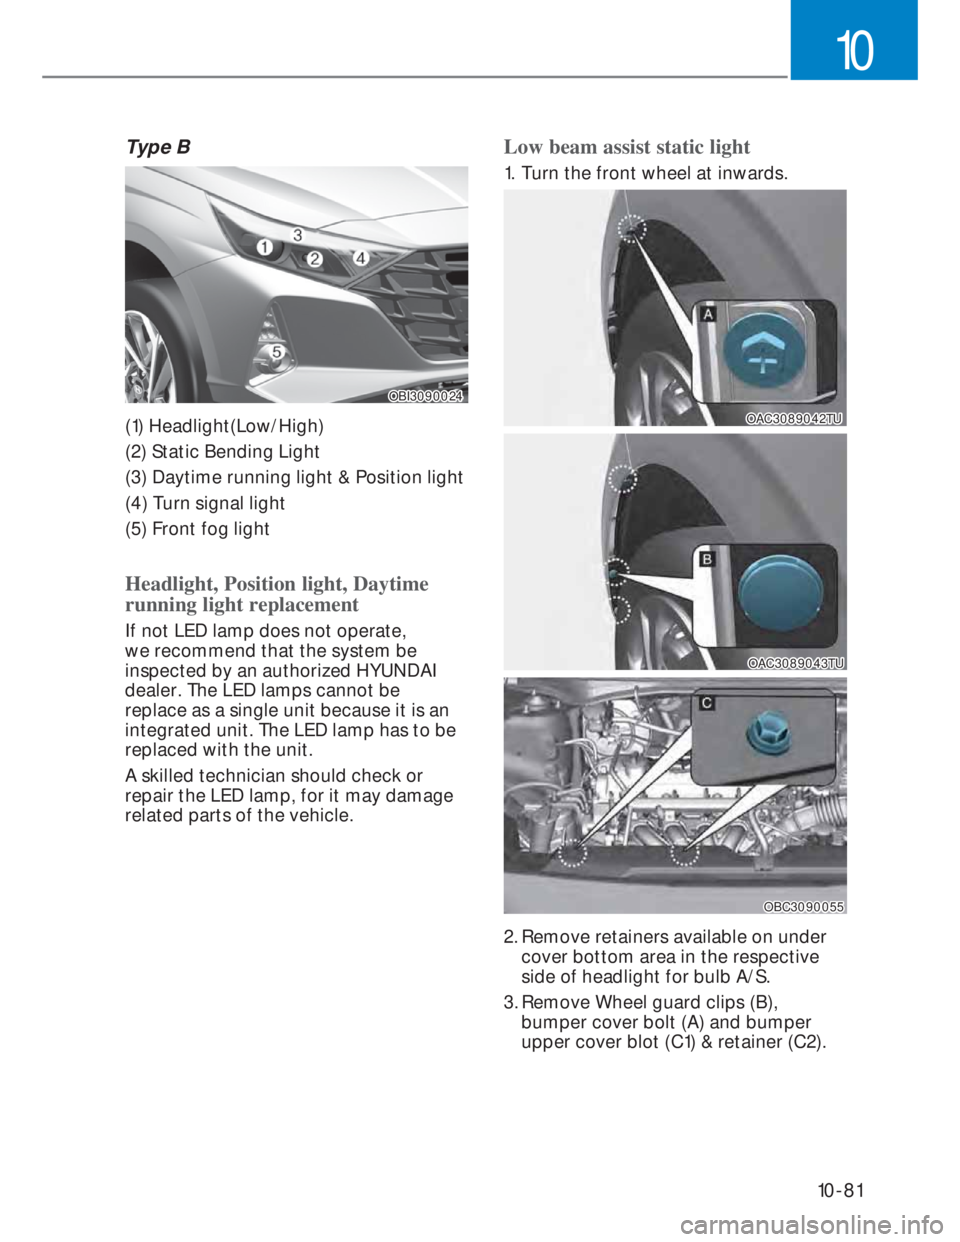 HYUNDAI I20 2021  Owners Manual 10-81
10
Type B
OBI3090024OBI3090024
(1) Headlight(Low/High)
(2) Static Bending Light
(3) Daytime running light & Position light
(4) Turn signal light
(5) Front fog light
Headlight, Position light, Da